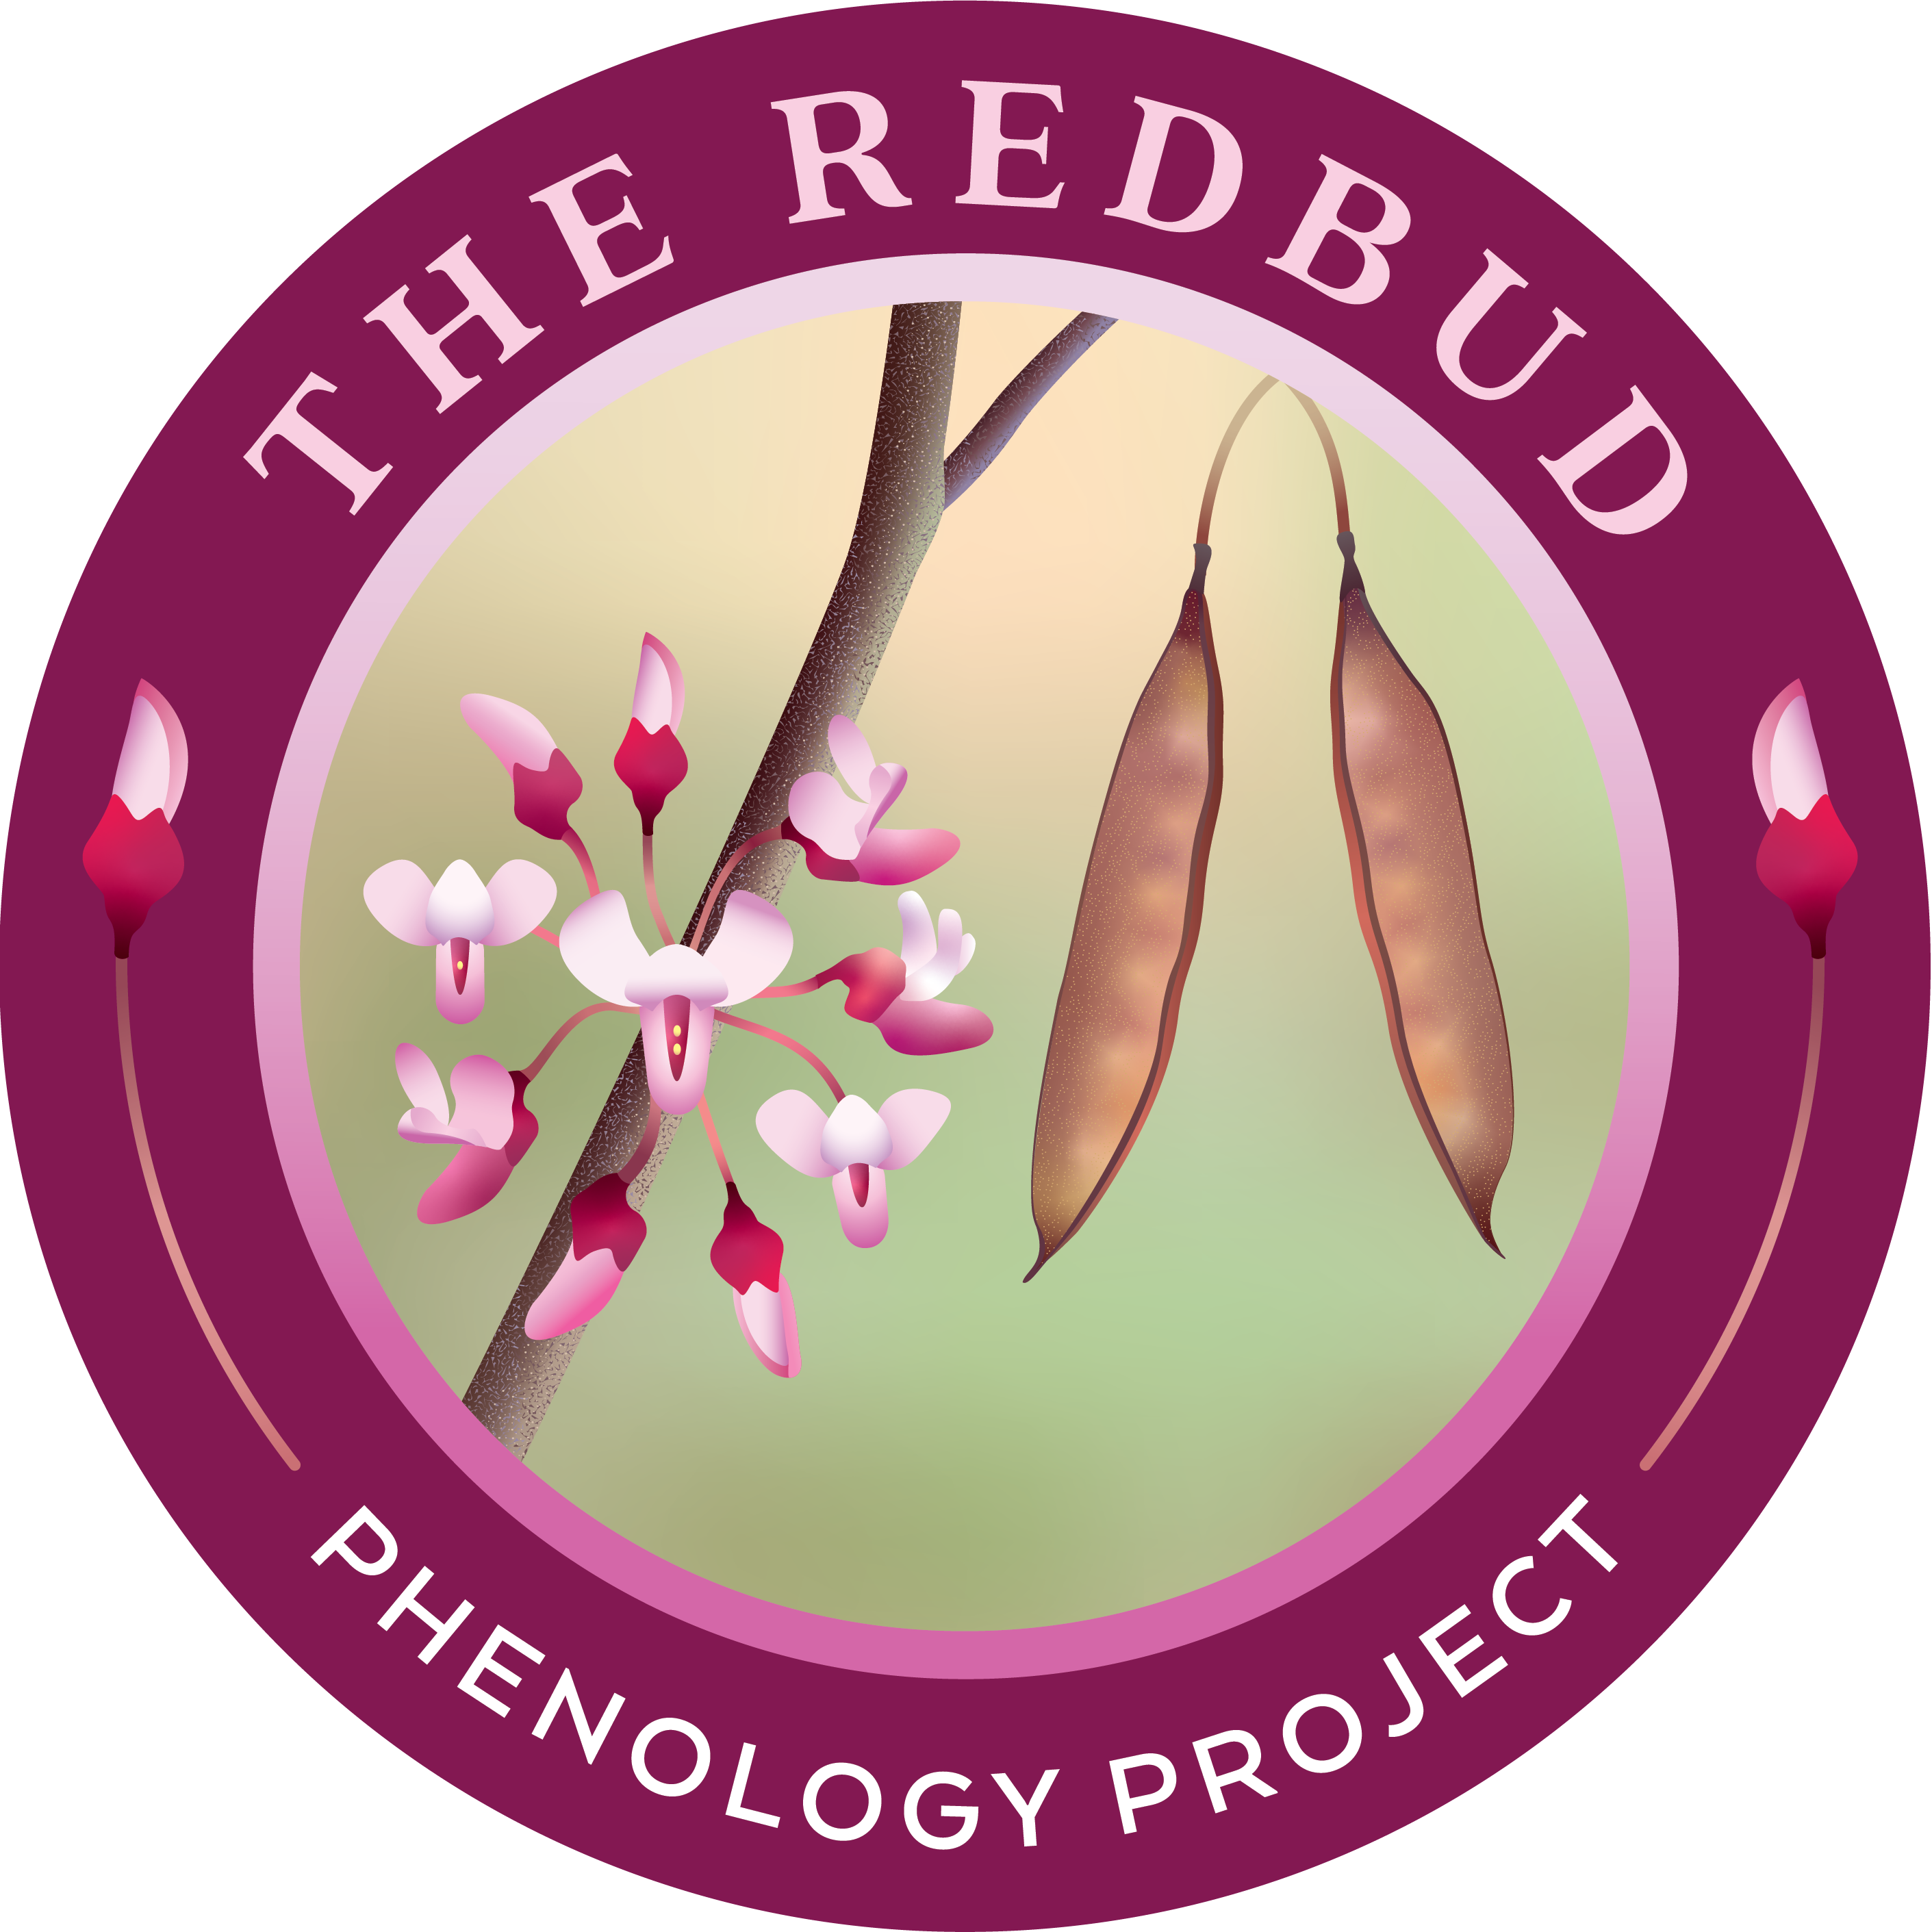 The Redbud Phenology Project logo